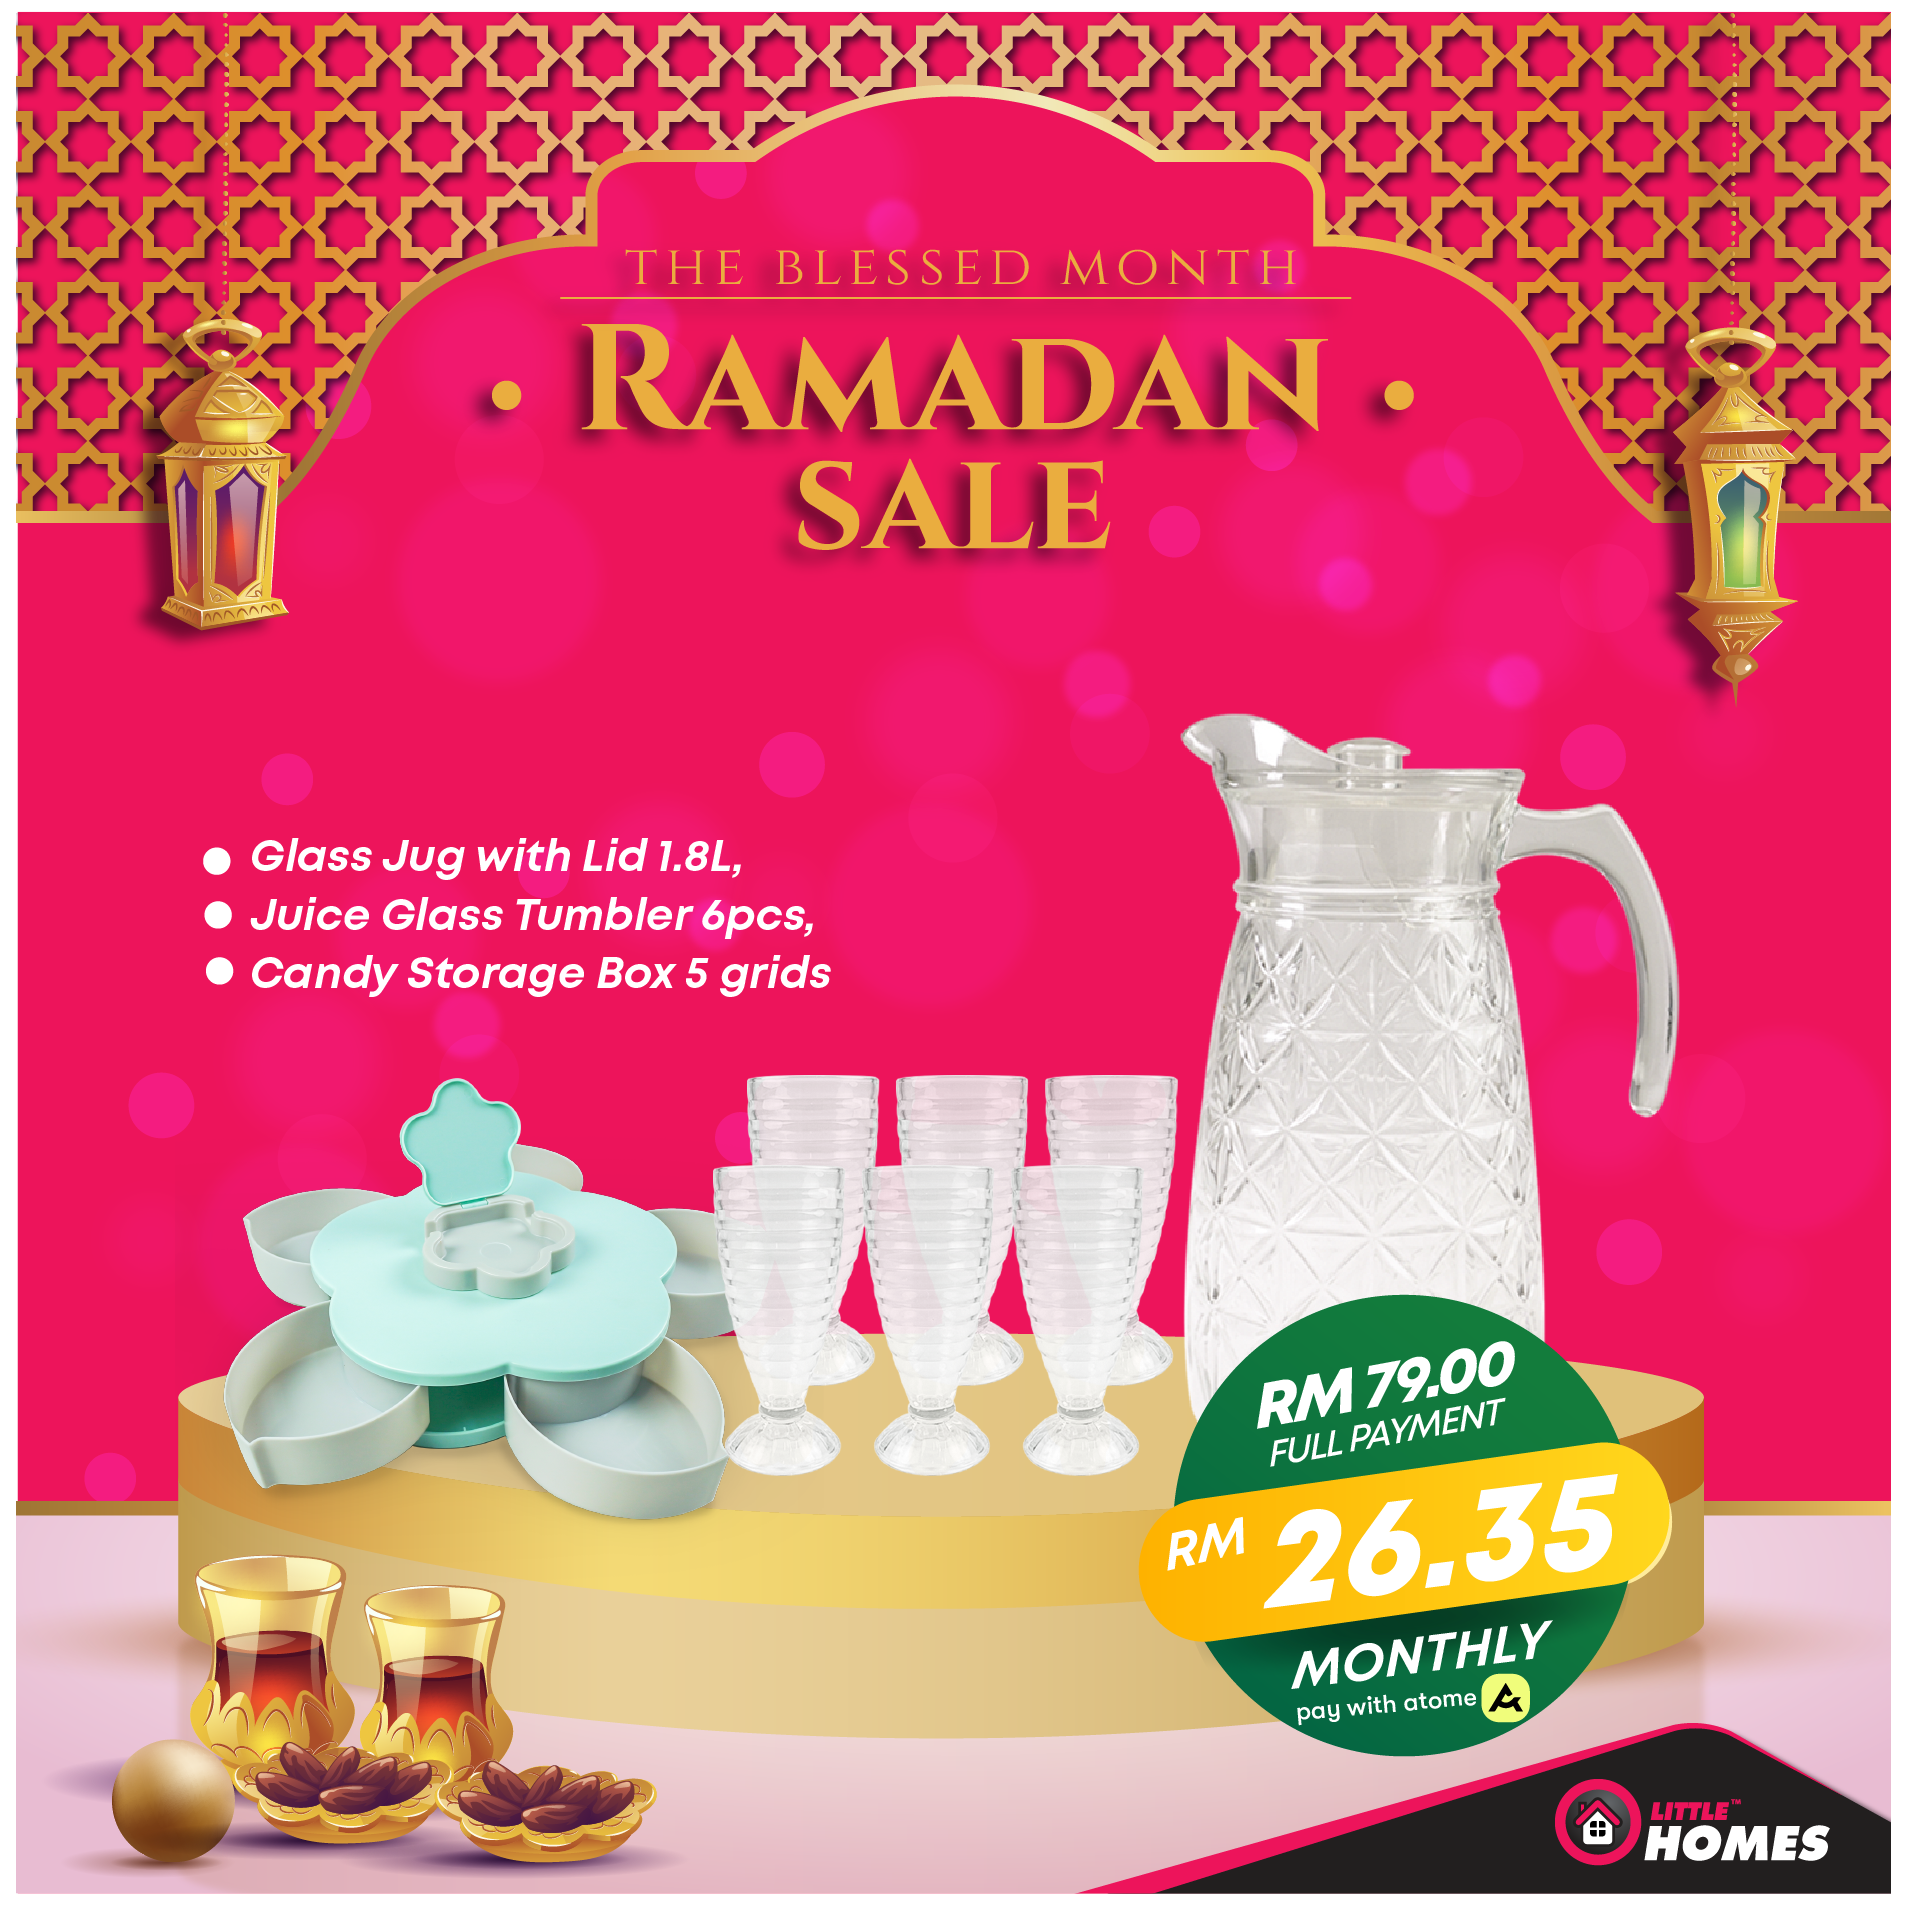 Little Homes 32cm Jumbo Pot & Frying Wok with 3pcs Saucepan #HomeyRaya23 Ramadan Bundle Sale RM159.00 *Available for RM53.00 of 3payments with Atome*